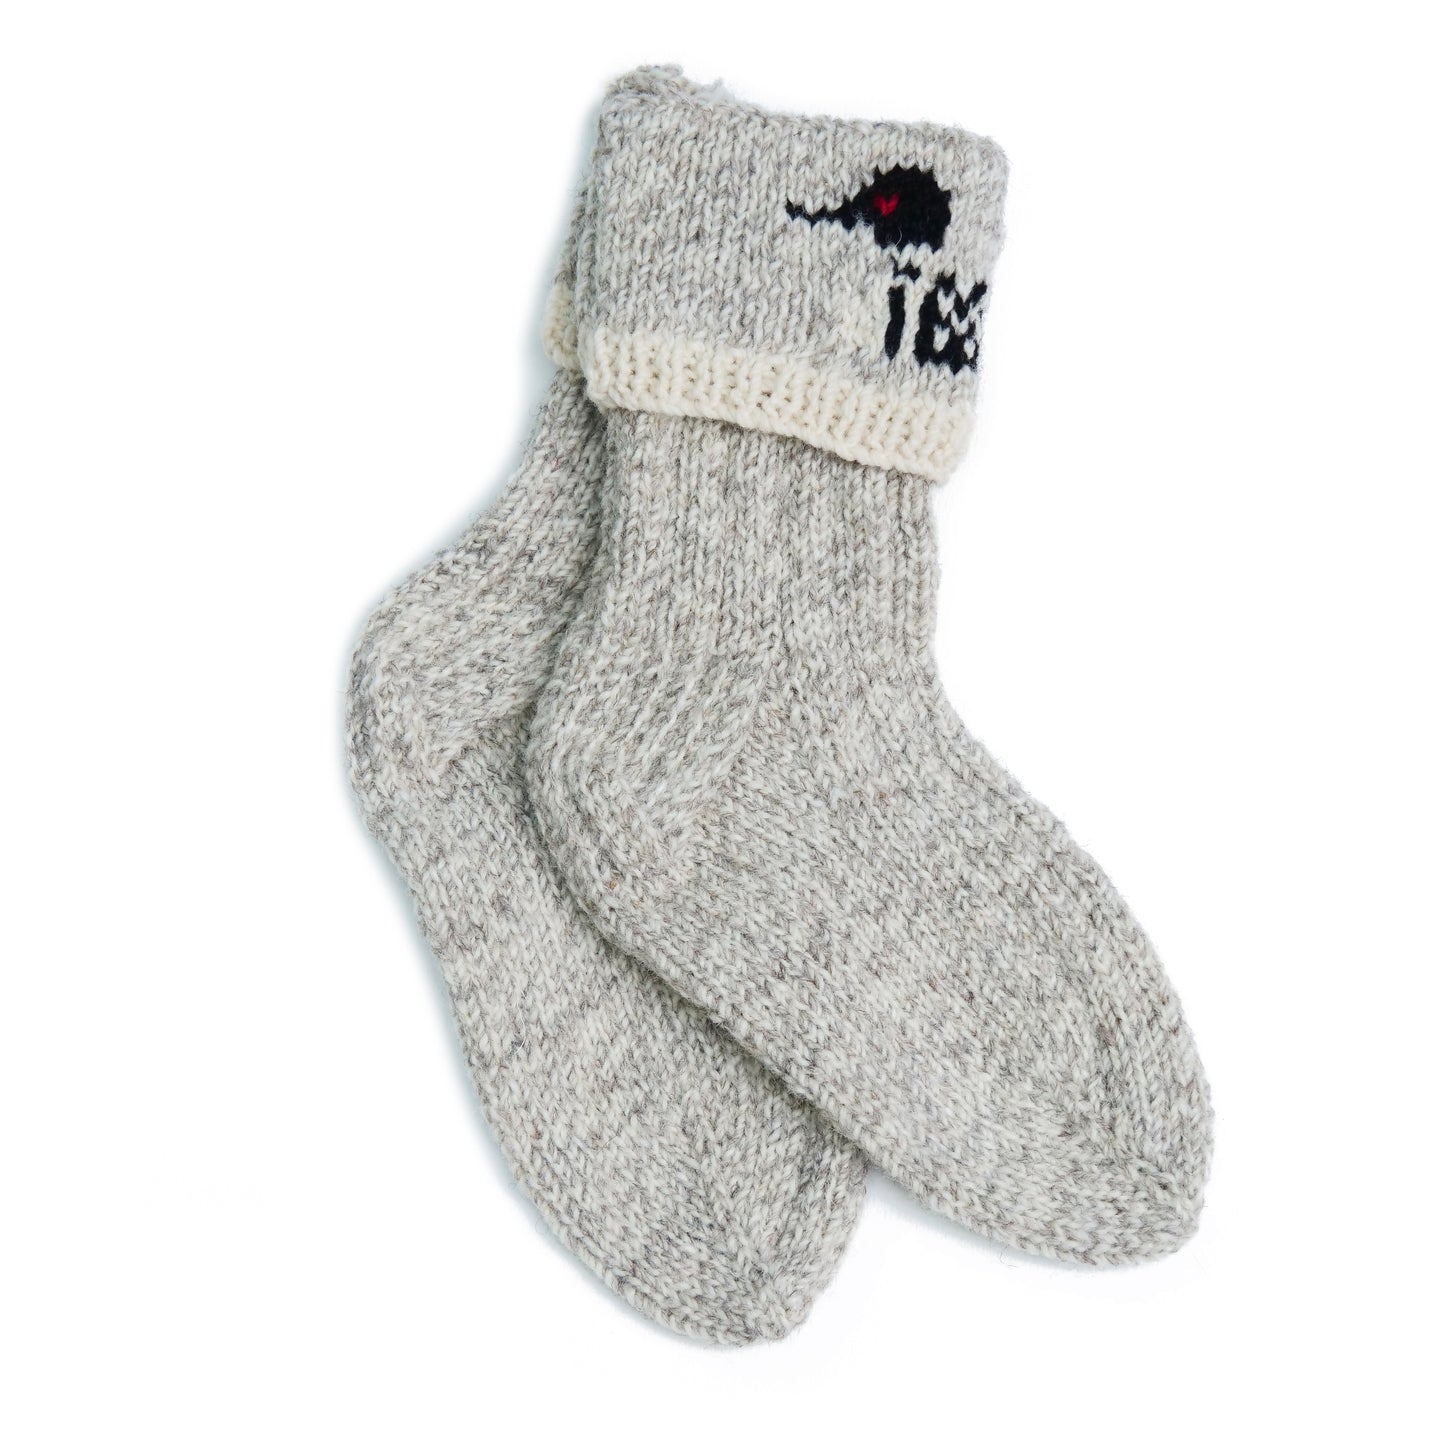 Loon Socks - Assorted Grey - Small/Medium